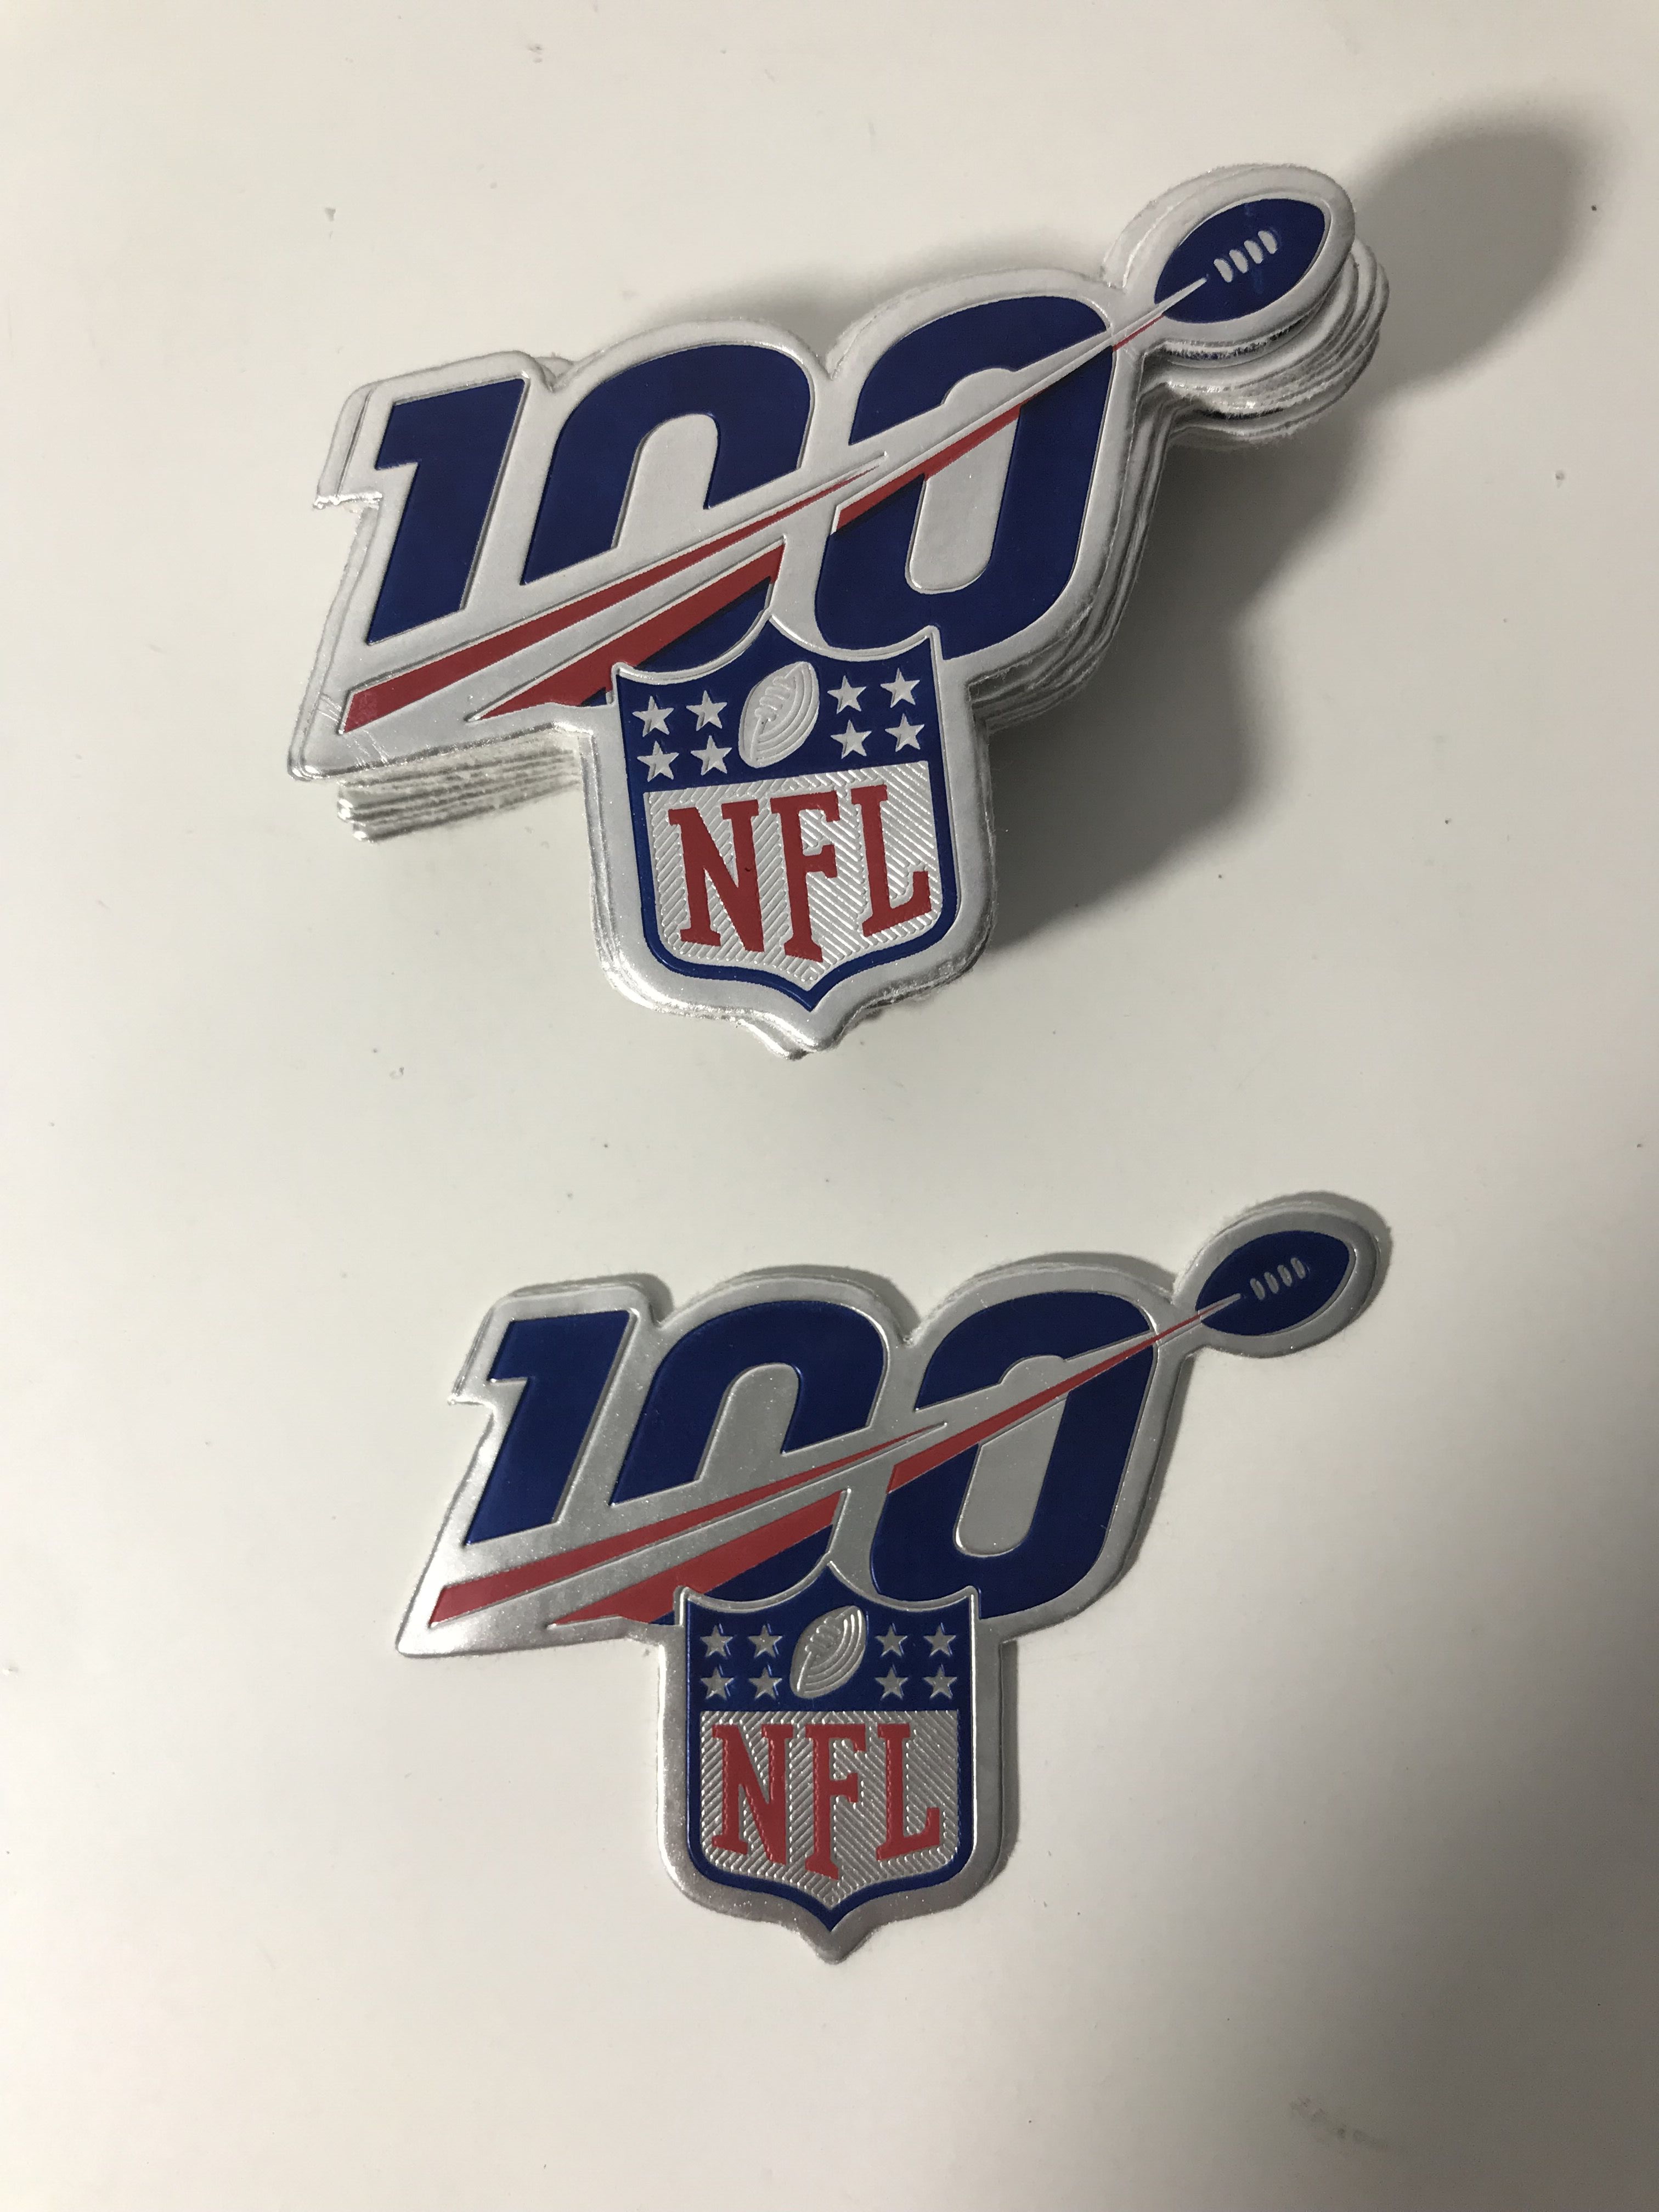 2019 NFL 100th Anniversary Seasons Football Jersey Patch